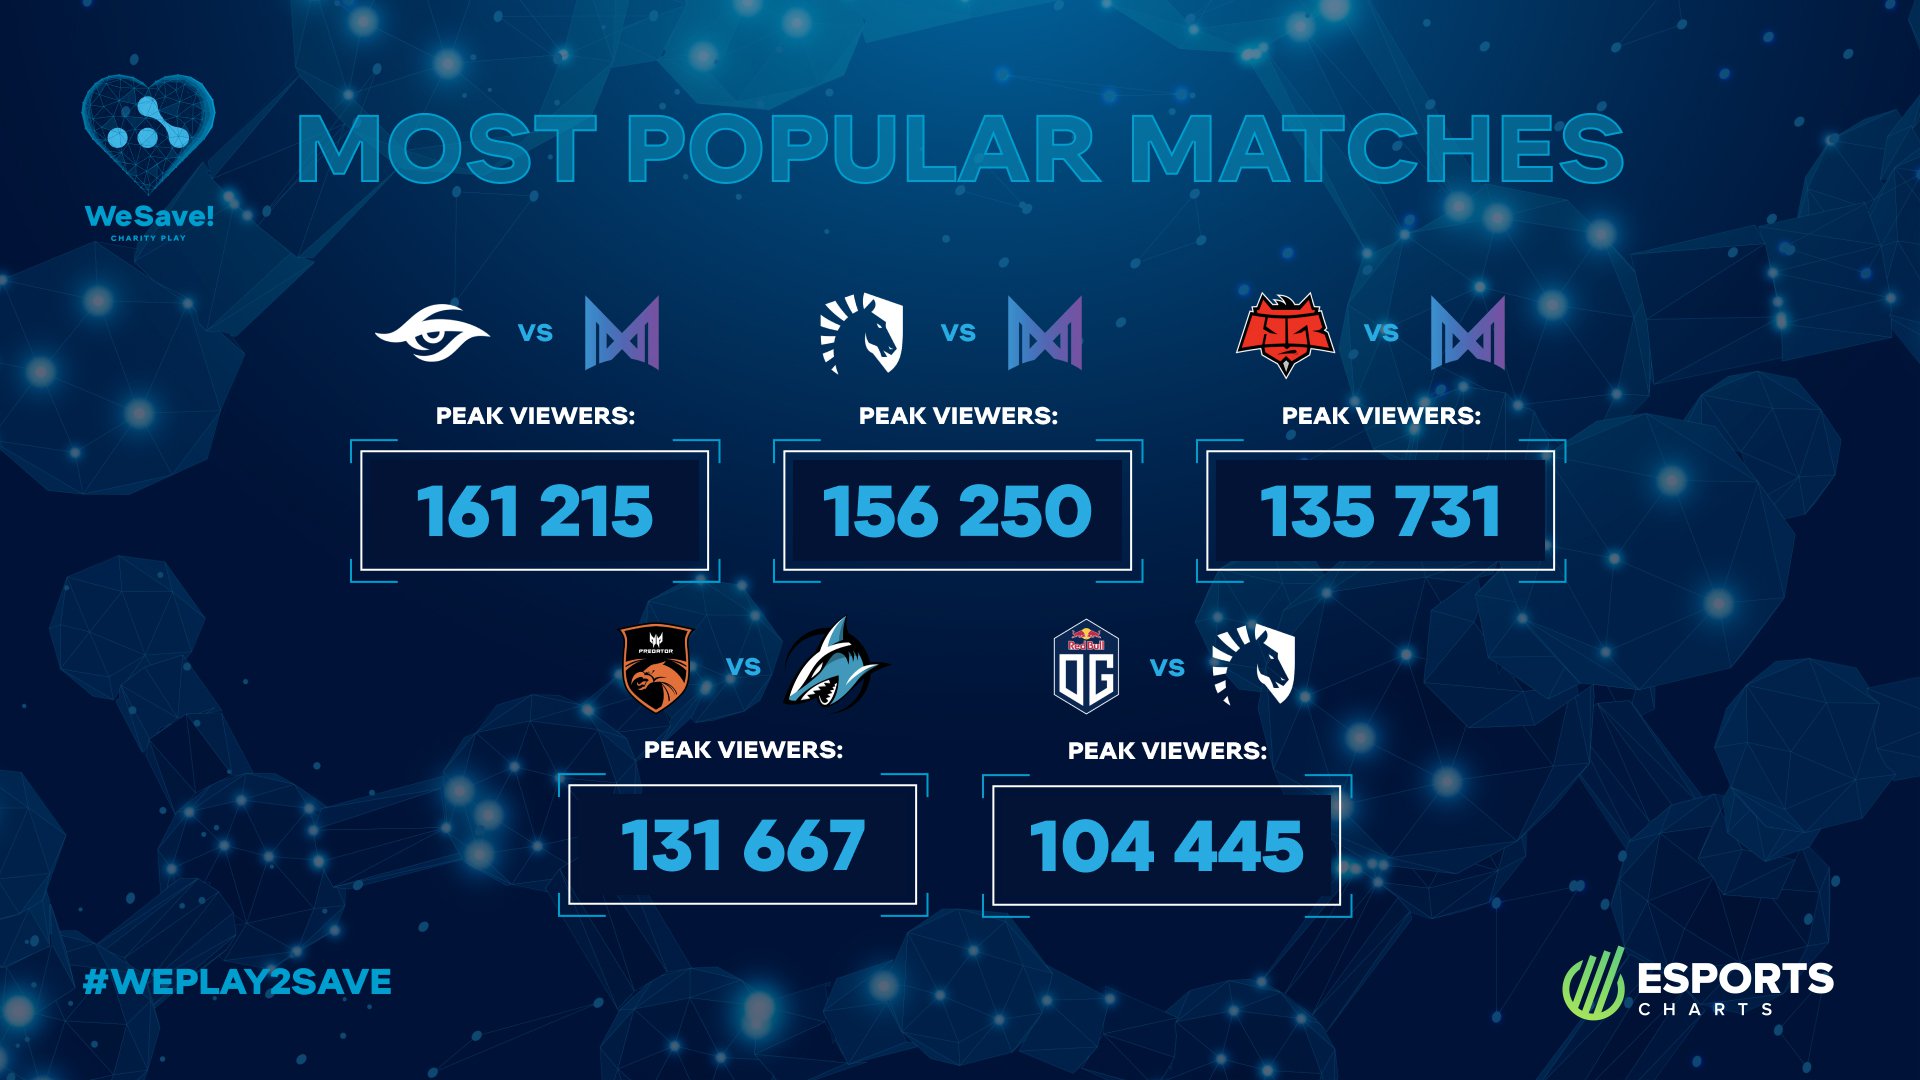 Most popular matches